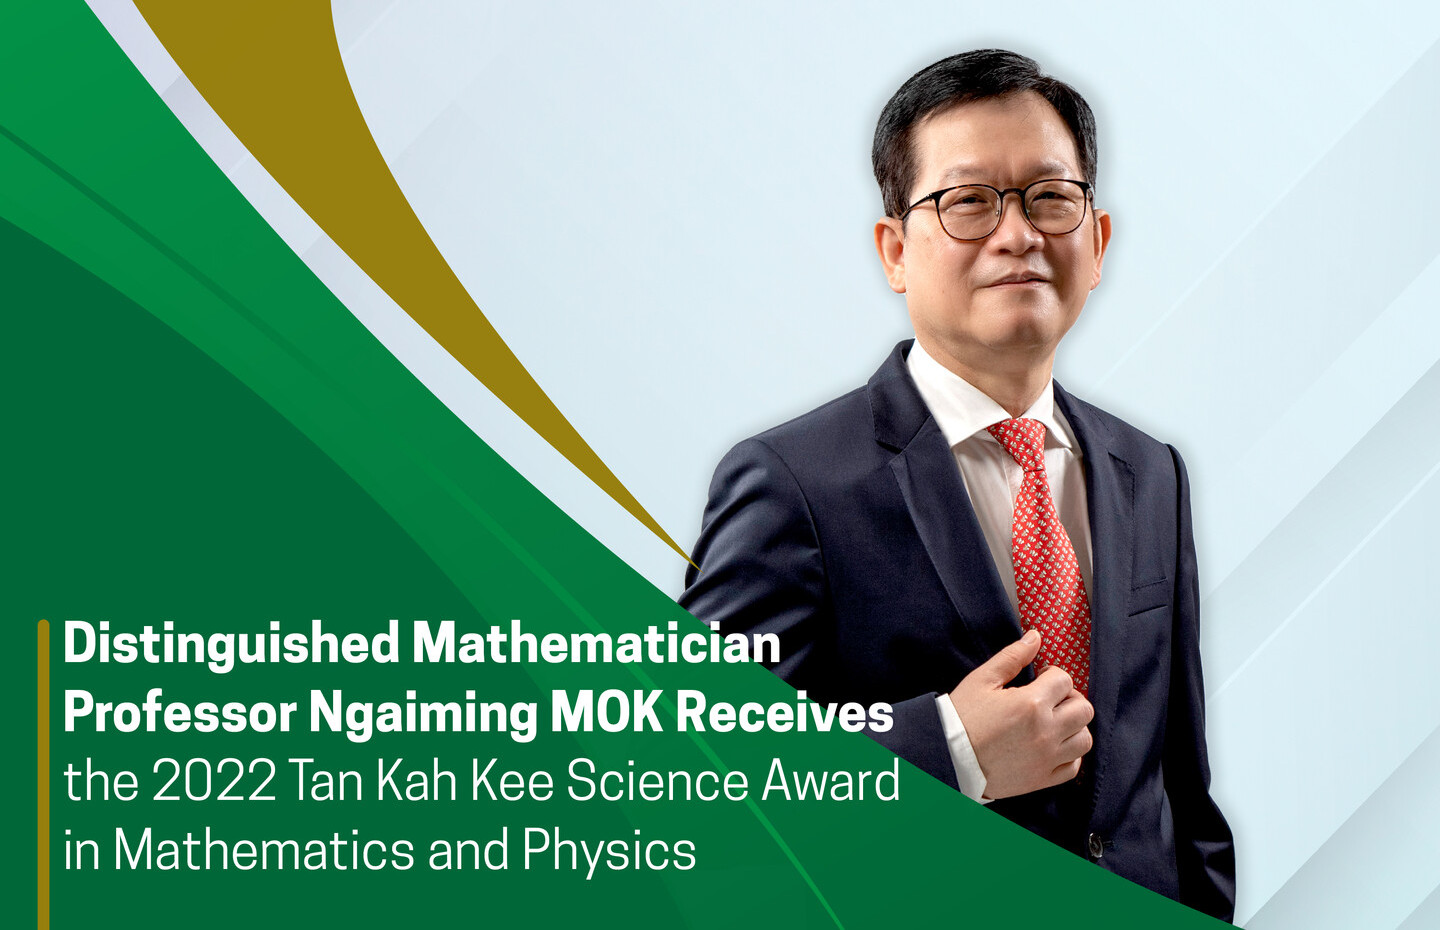 Distinguished Mathematician Professor Nagiming MOK Receives the 2022 Tan Kah Kee Science Award in Mathematics and Physics